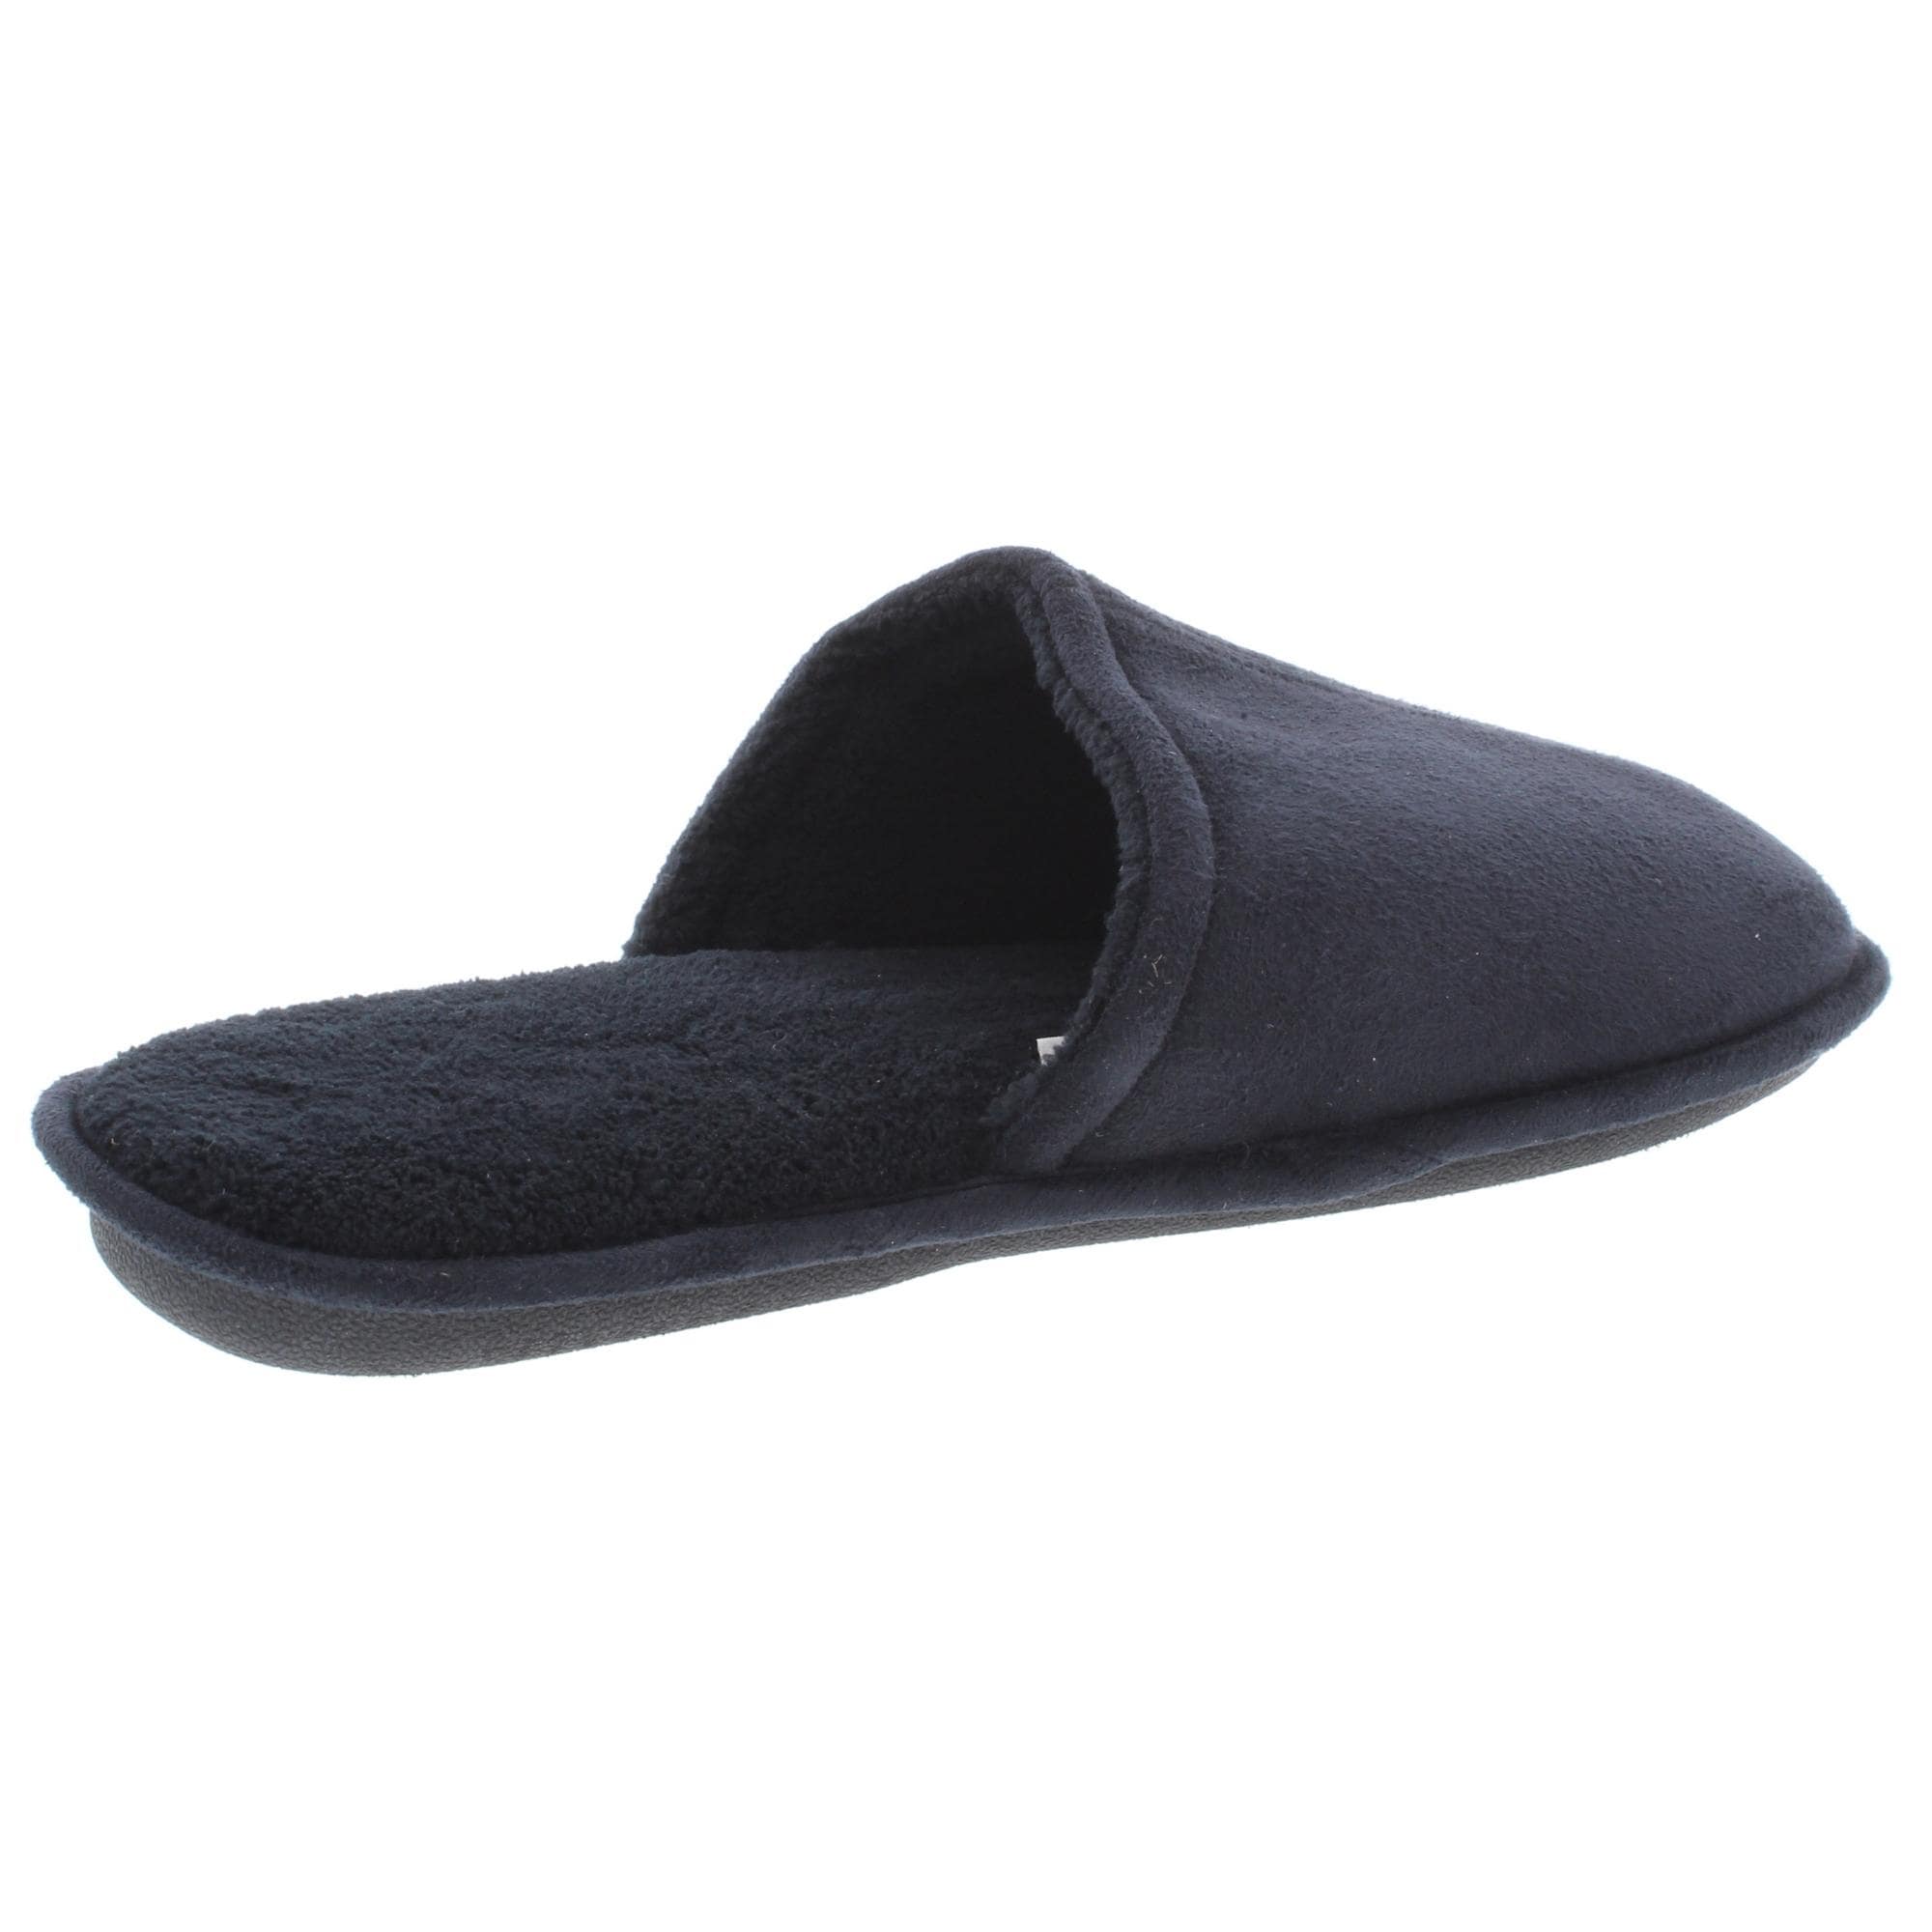 goldtoe slippers